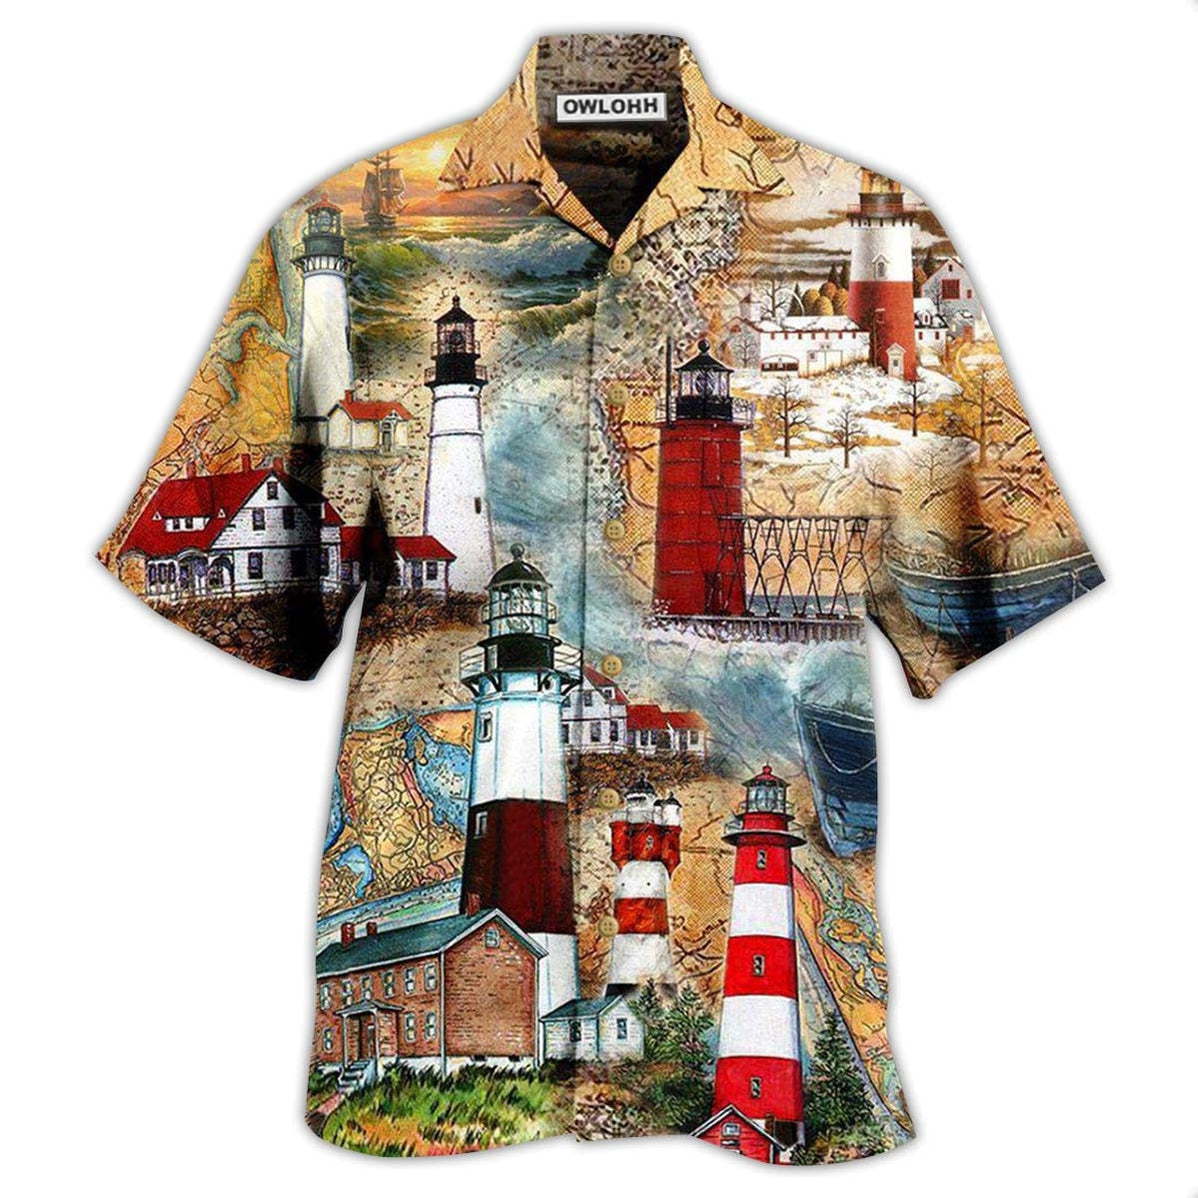 Hawaiian Shirt / Adults / S Lighthouse The Past Is A Lighthouse Not A Port - Hawaiian Shirt - Owls Matrix LTD